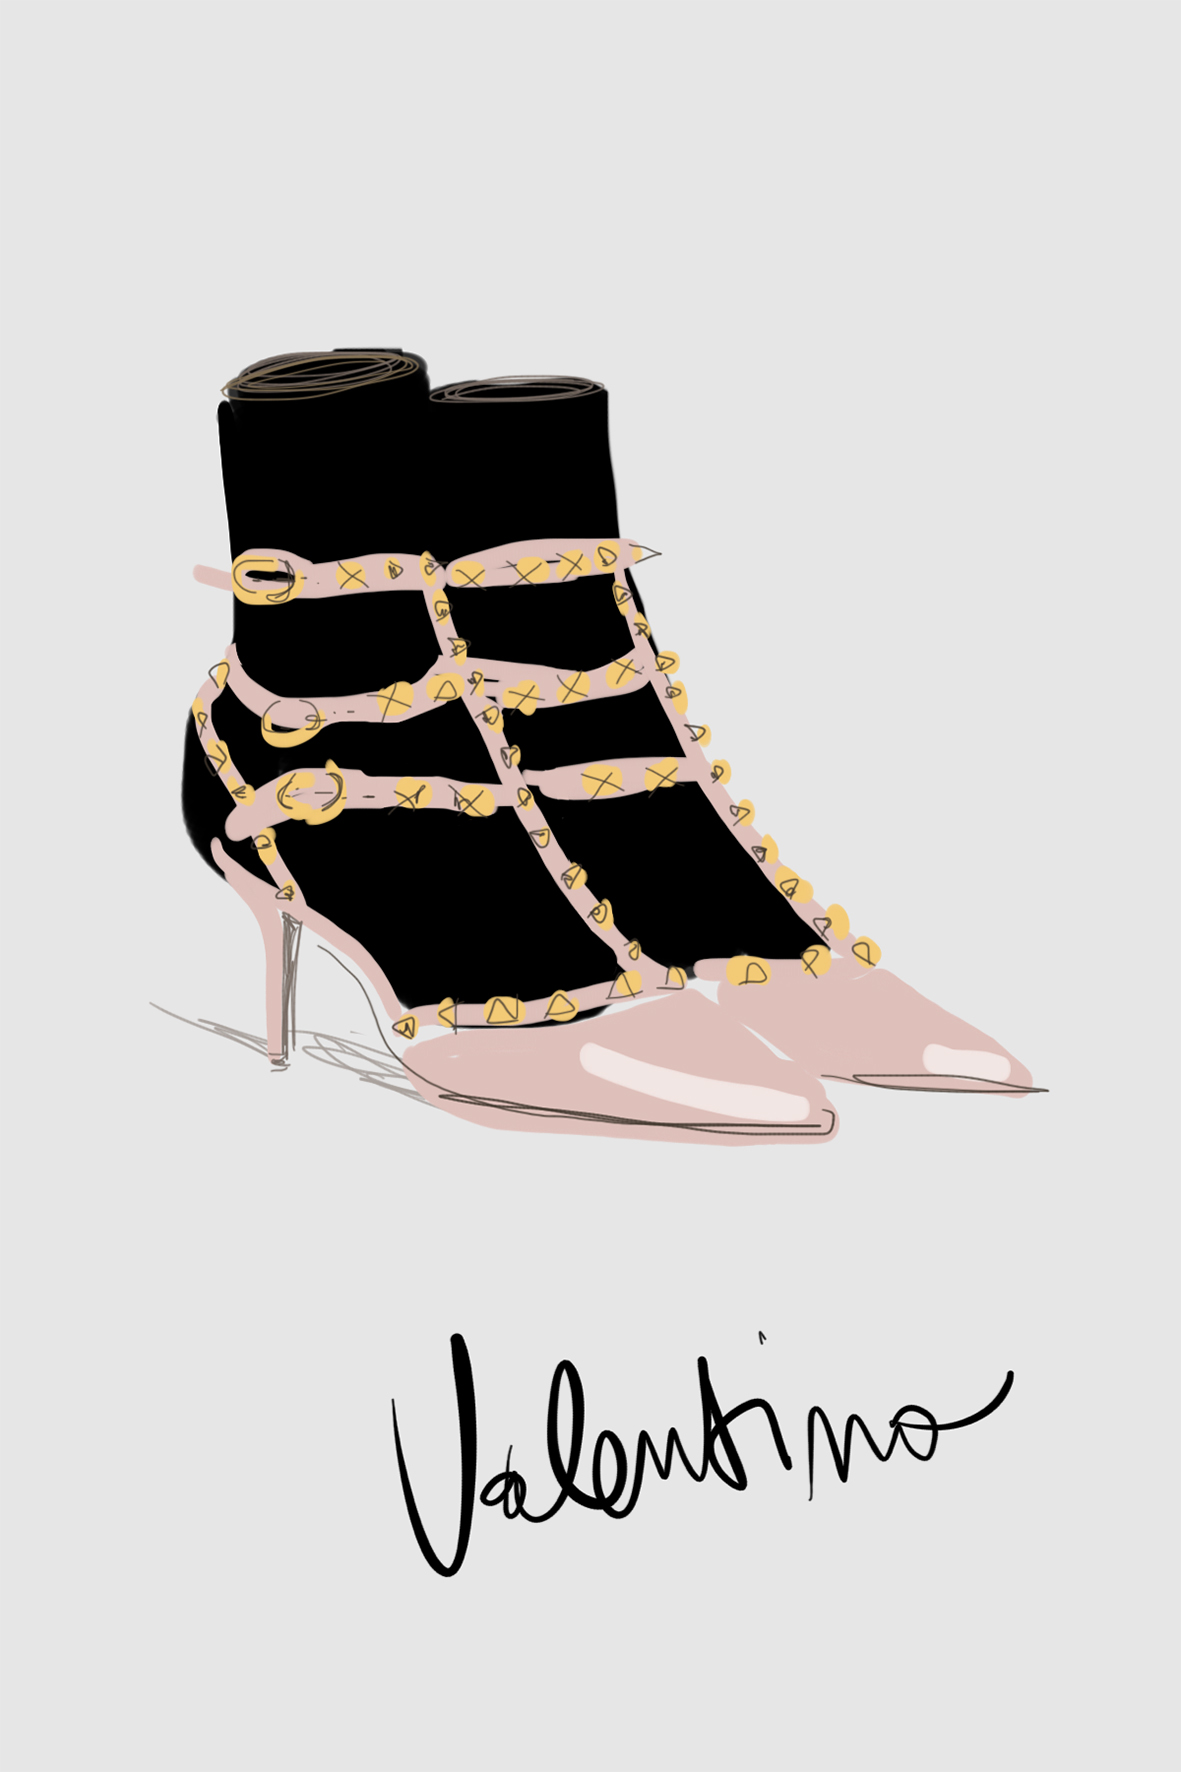 Valentino Shoes Illustration by Silvana Mariani